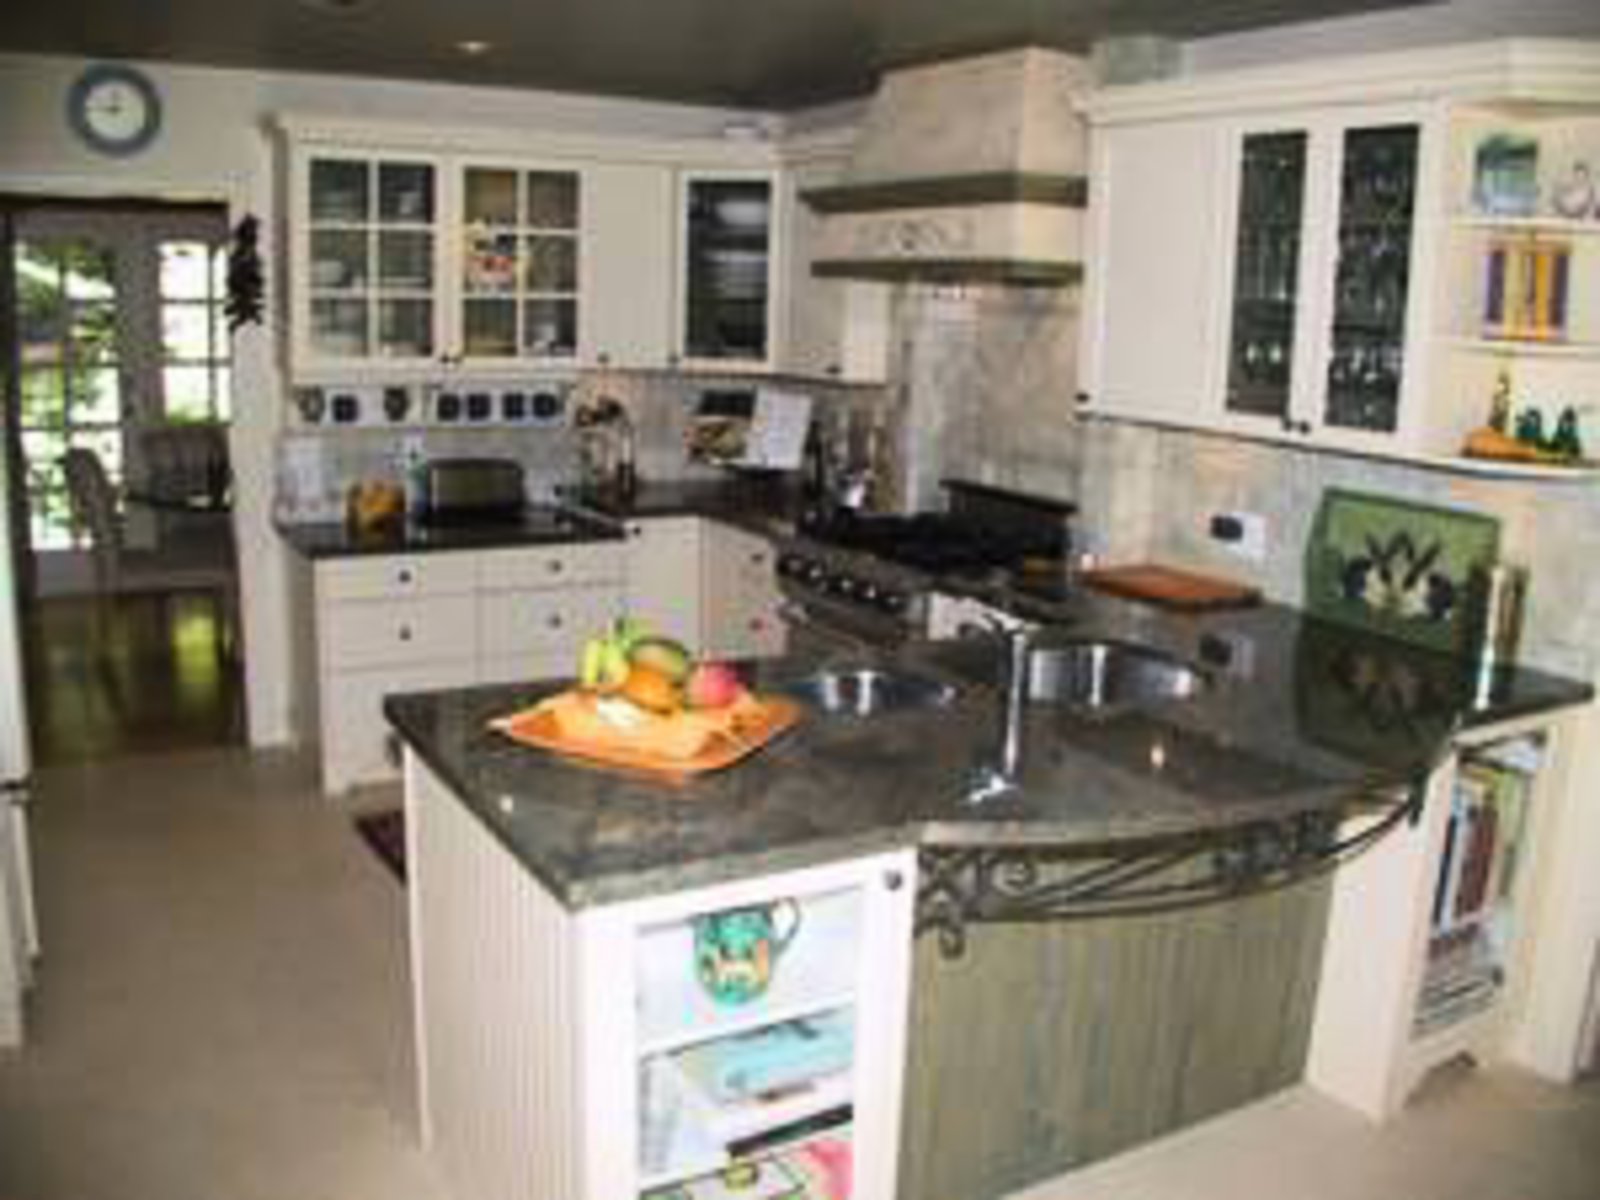 Gourmet Kitchen Top of the line appliances- subzerom Mielle, granite countertops